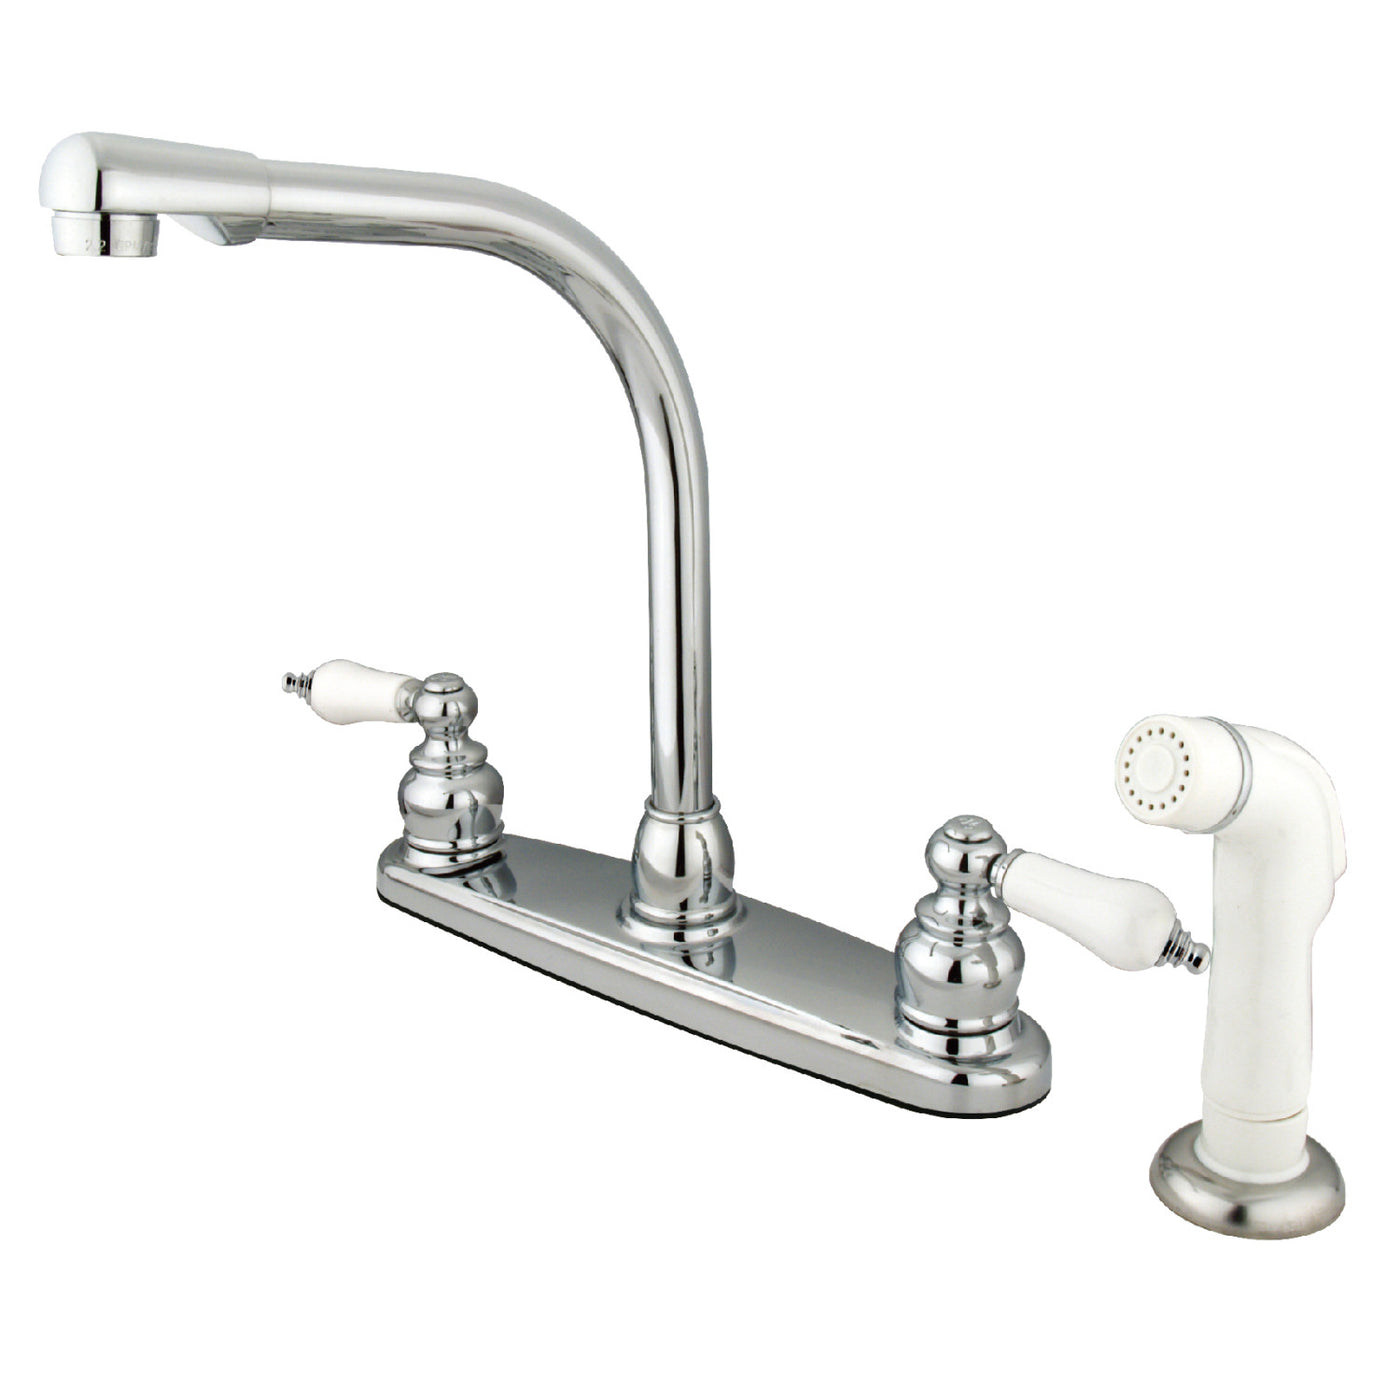 Elements of Design EB711 Centerset Kitchen Faucet, Polished Chrome